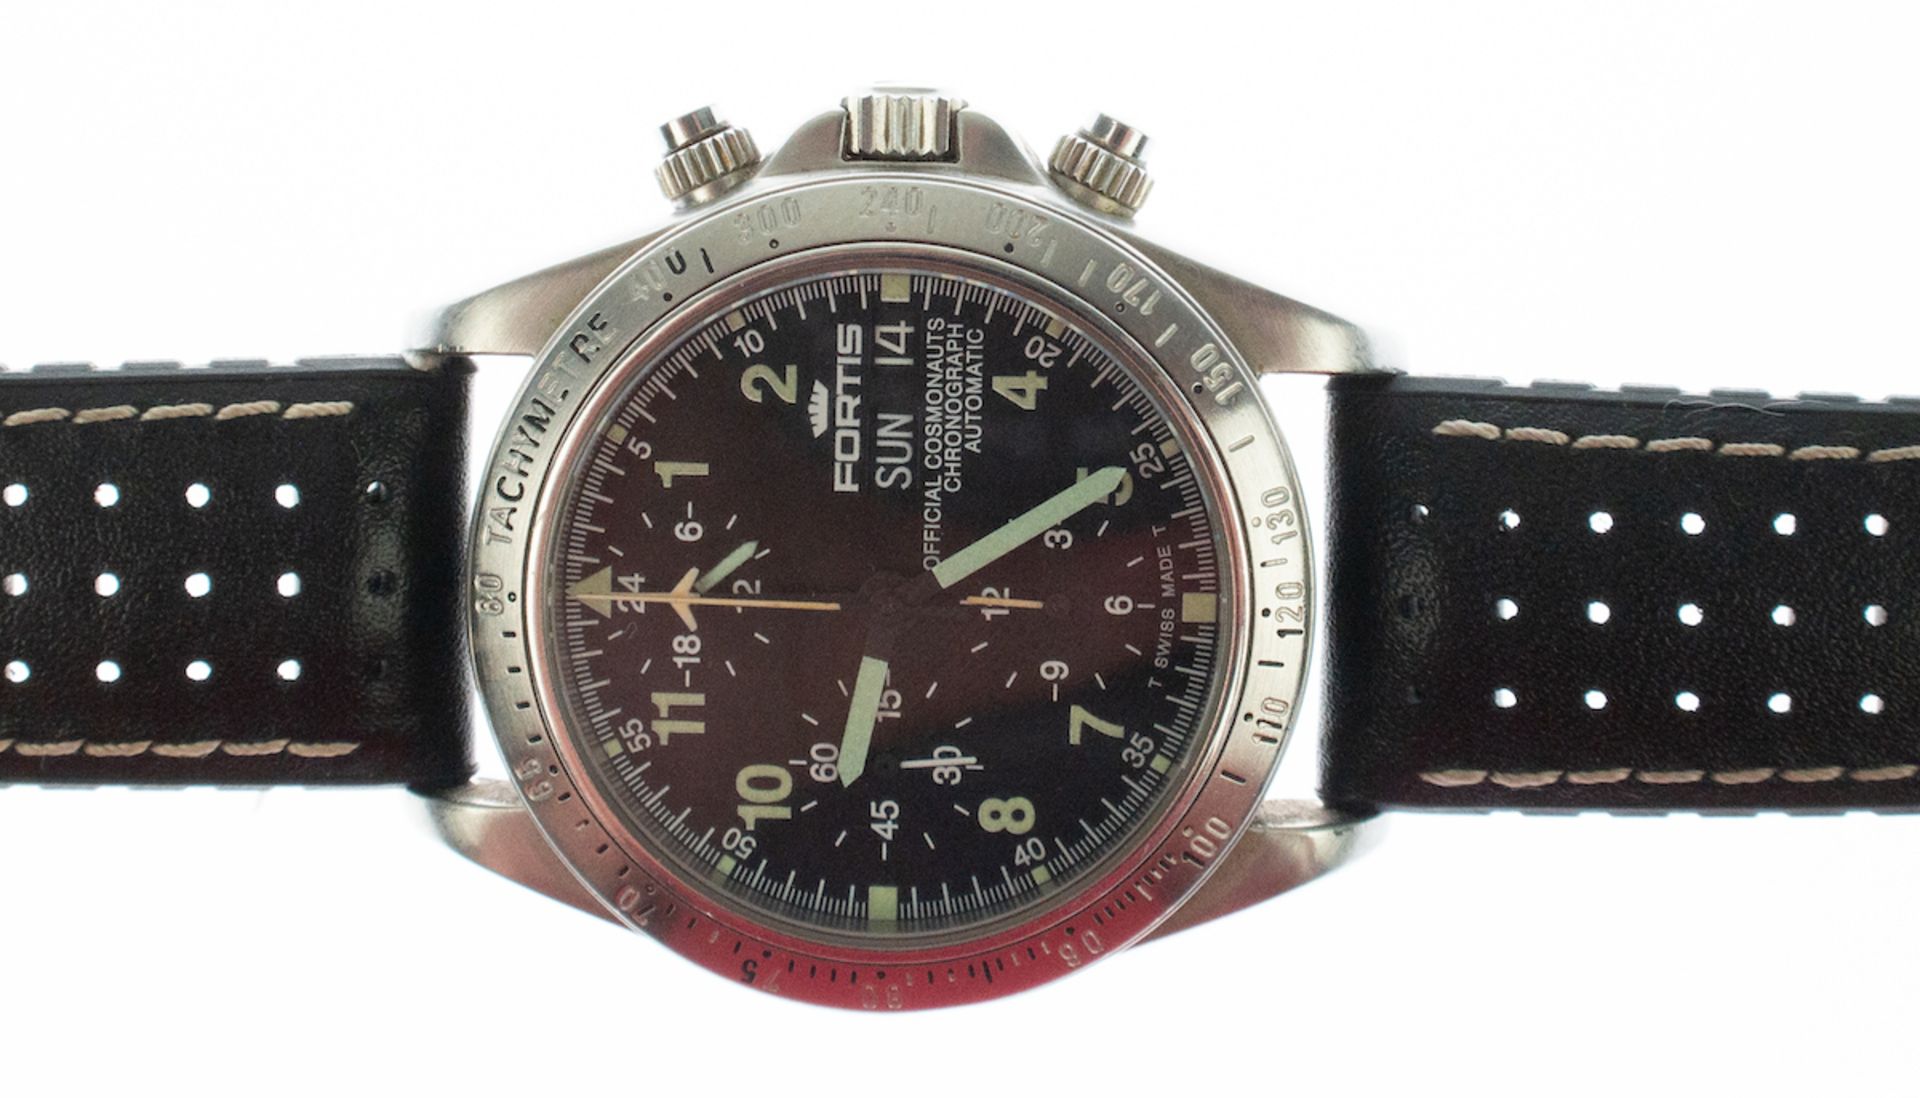 Herren-Armbanduhr "Fortis", Official Cosmonauts Chronograph Automatic, schwarzesZifferblatt mit